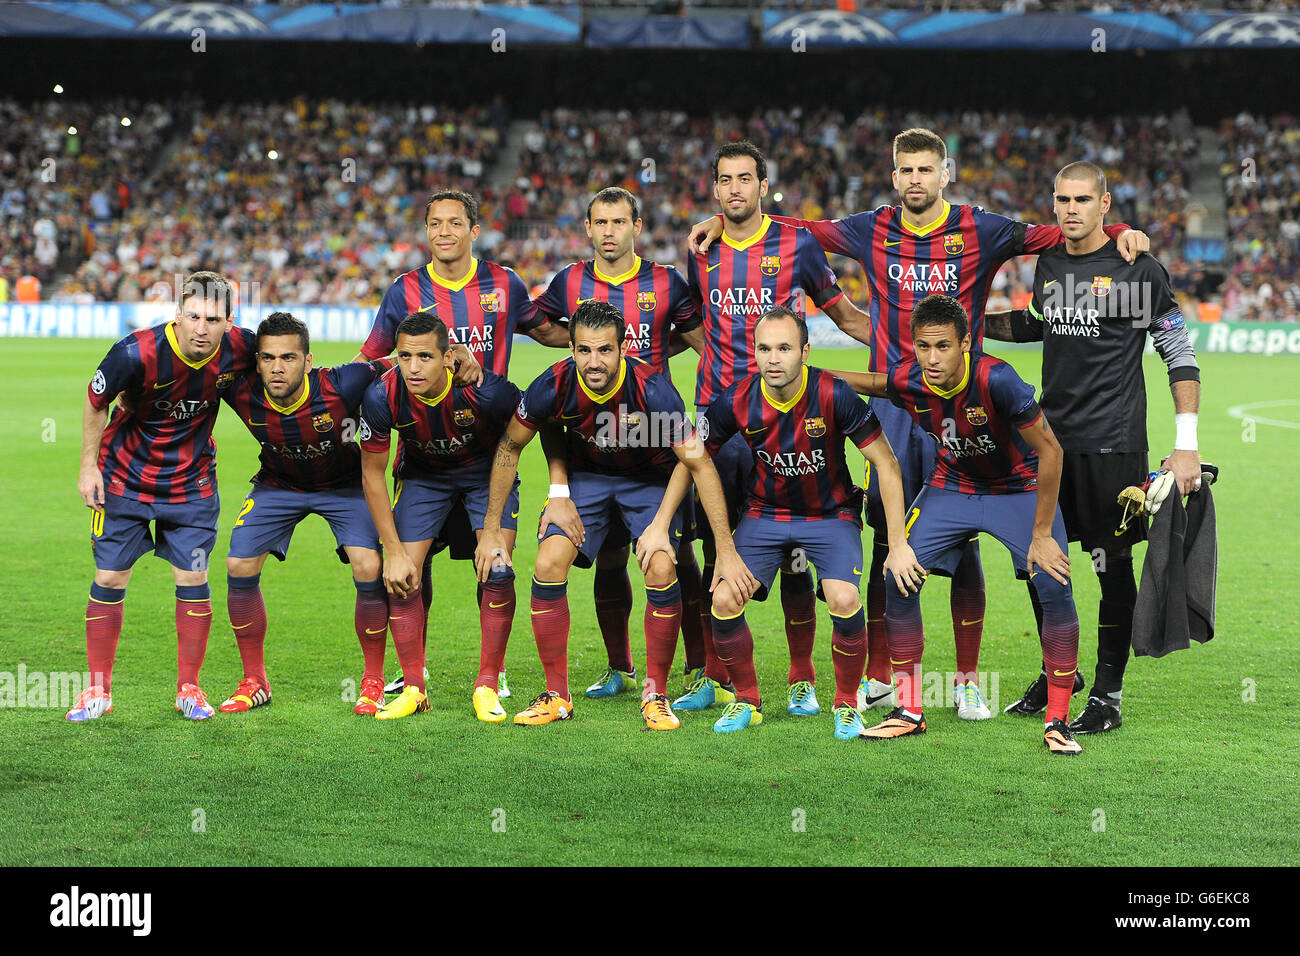 Soccer - UEFA Champions League - Group G - Barcelona v Ajax Amsterdam - Camp Nou. Barcelona team group pose for a photograph Stock Photo